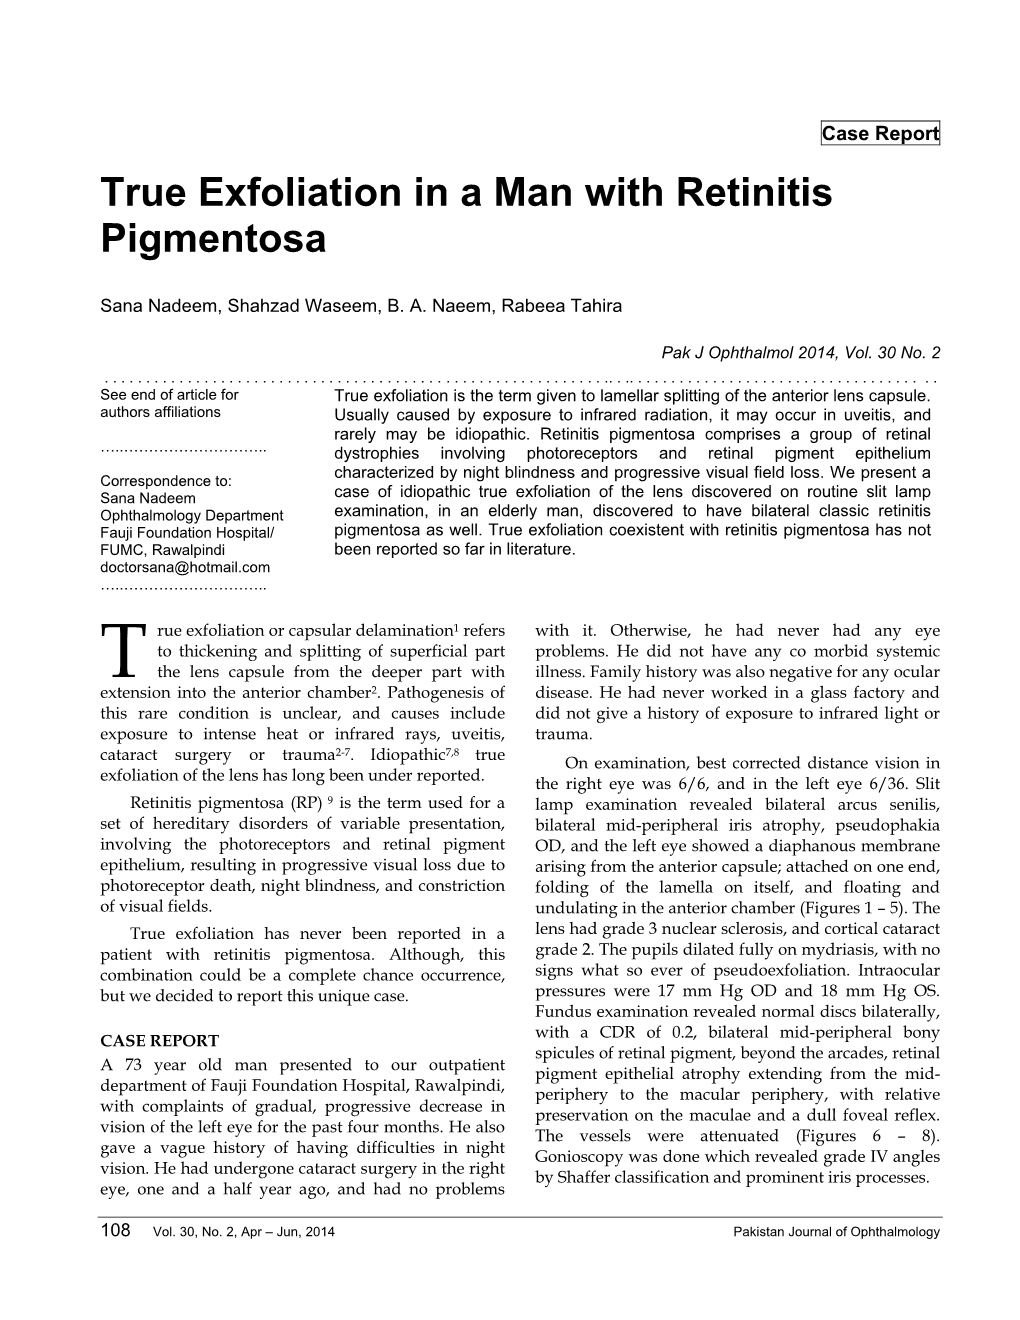 True Exfoliation in a Man with Retinitis Pigmentosa